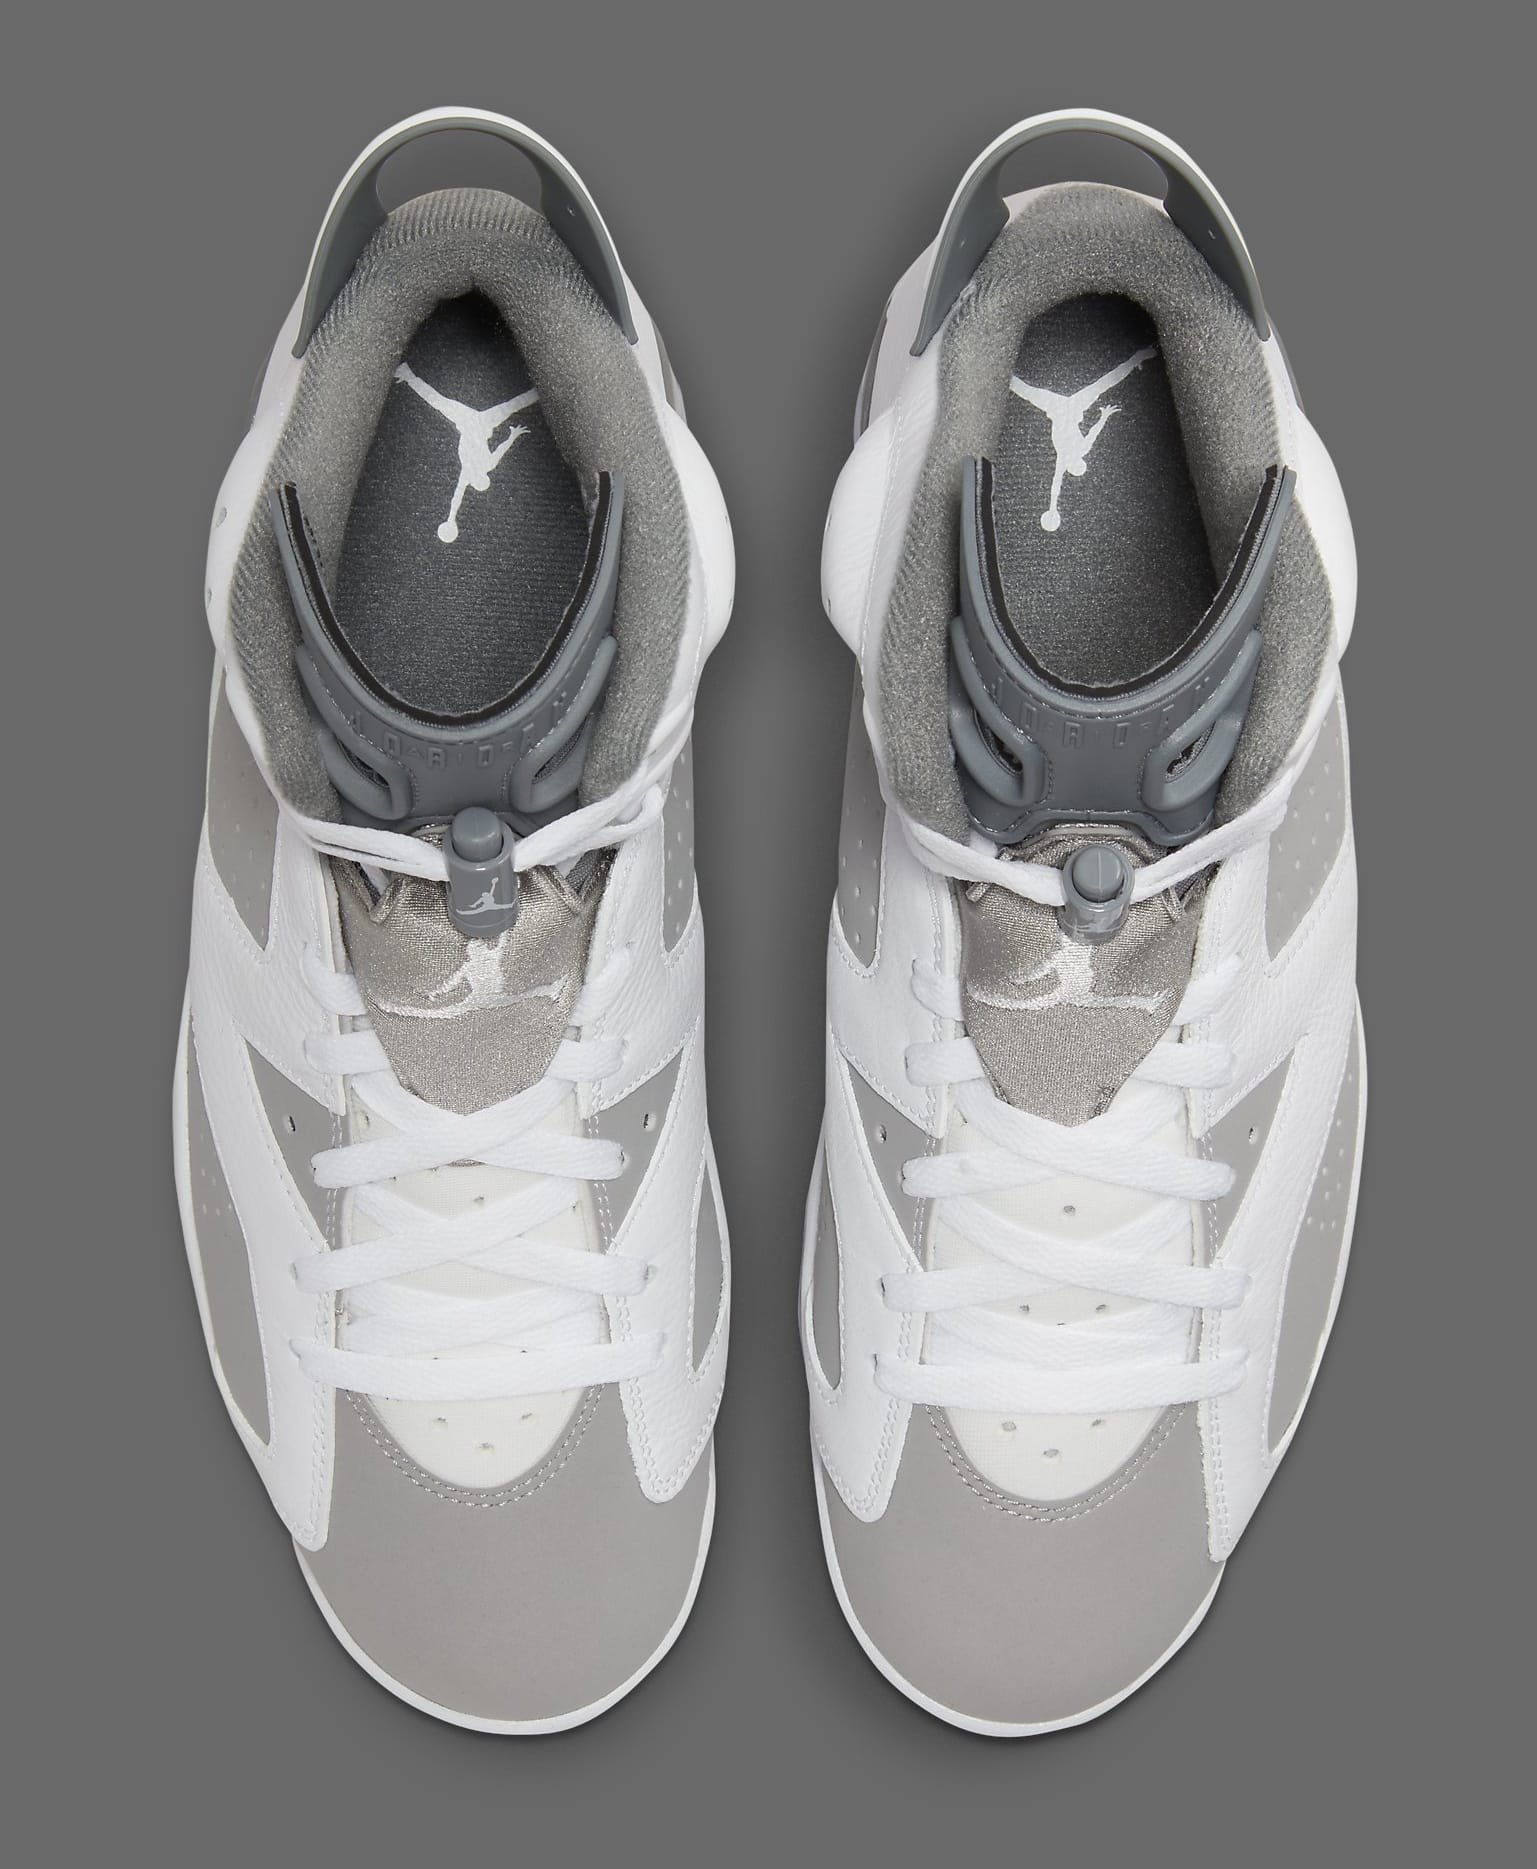 grey and white jordan 6